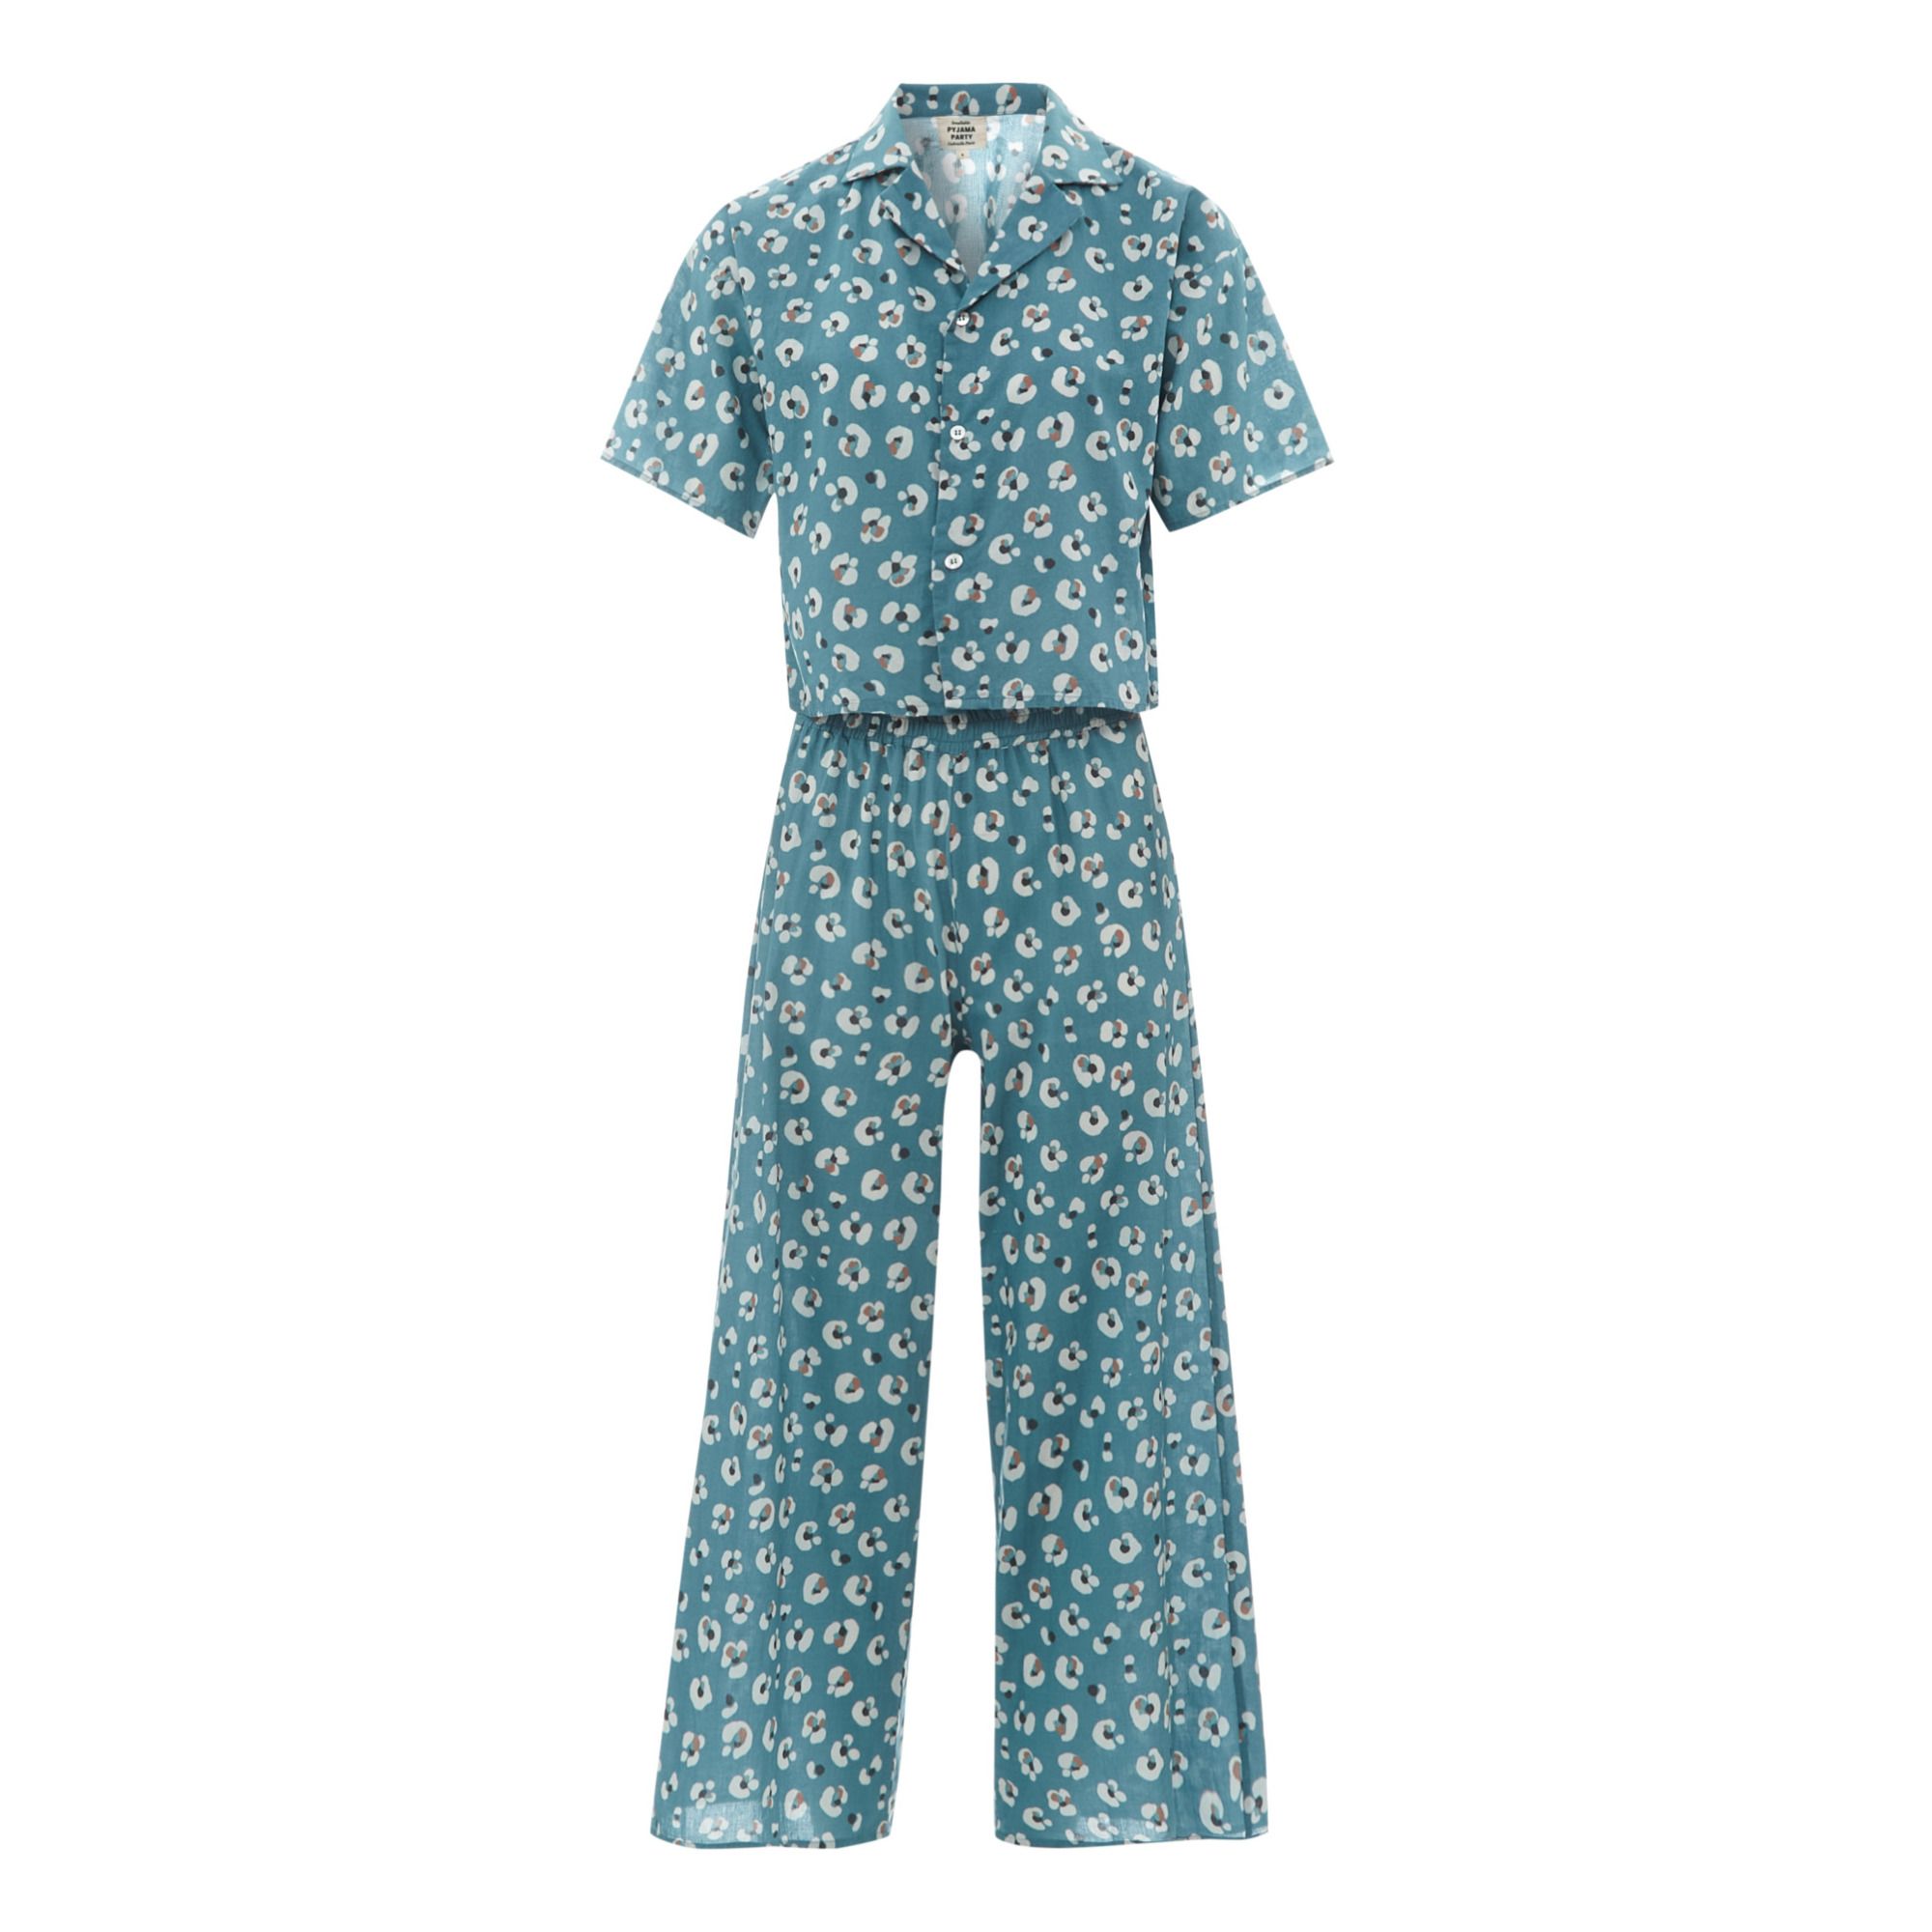 Gabrielle Paris Exclusivität Gabrielle Paris x Smallable Pyjama Party - Pyjama Hemd + Hose Ginger - Damenkollektion | Blau